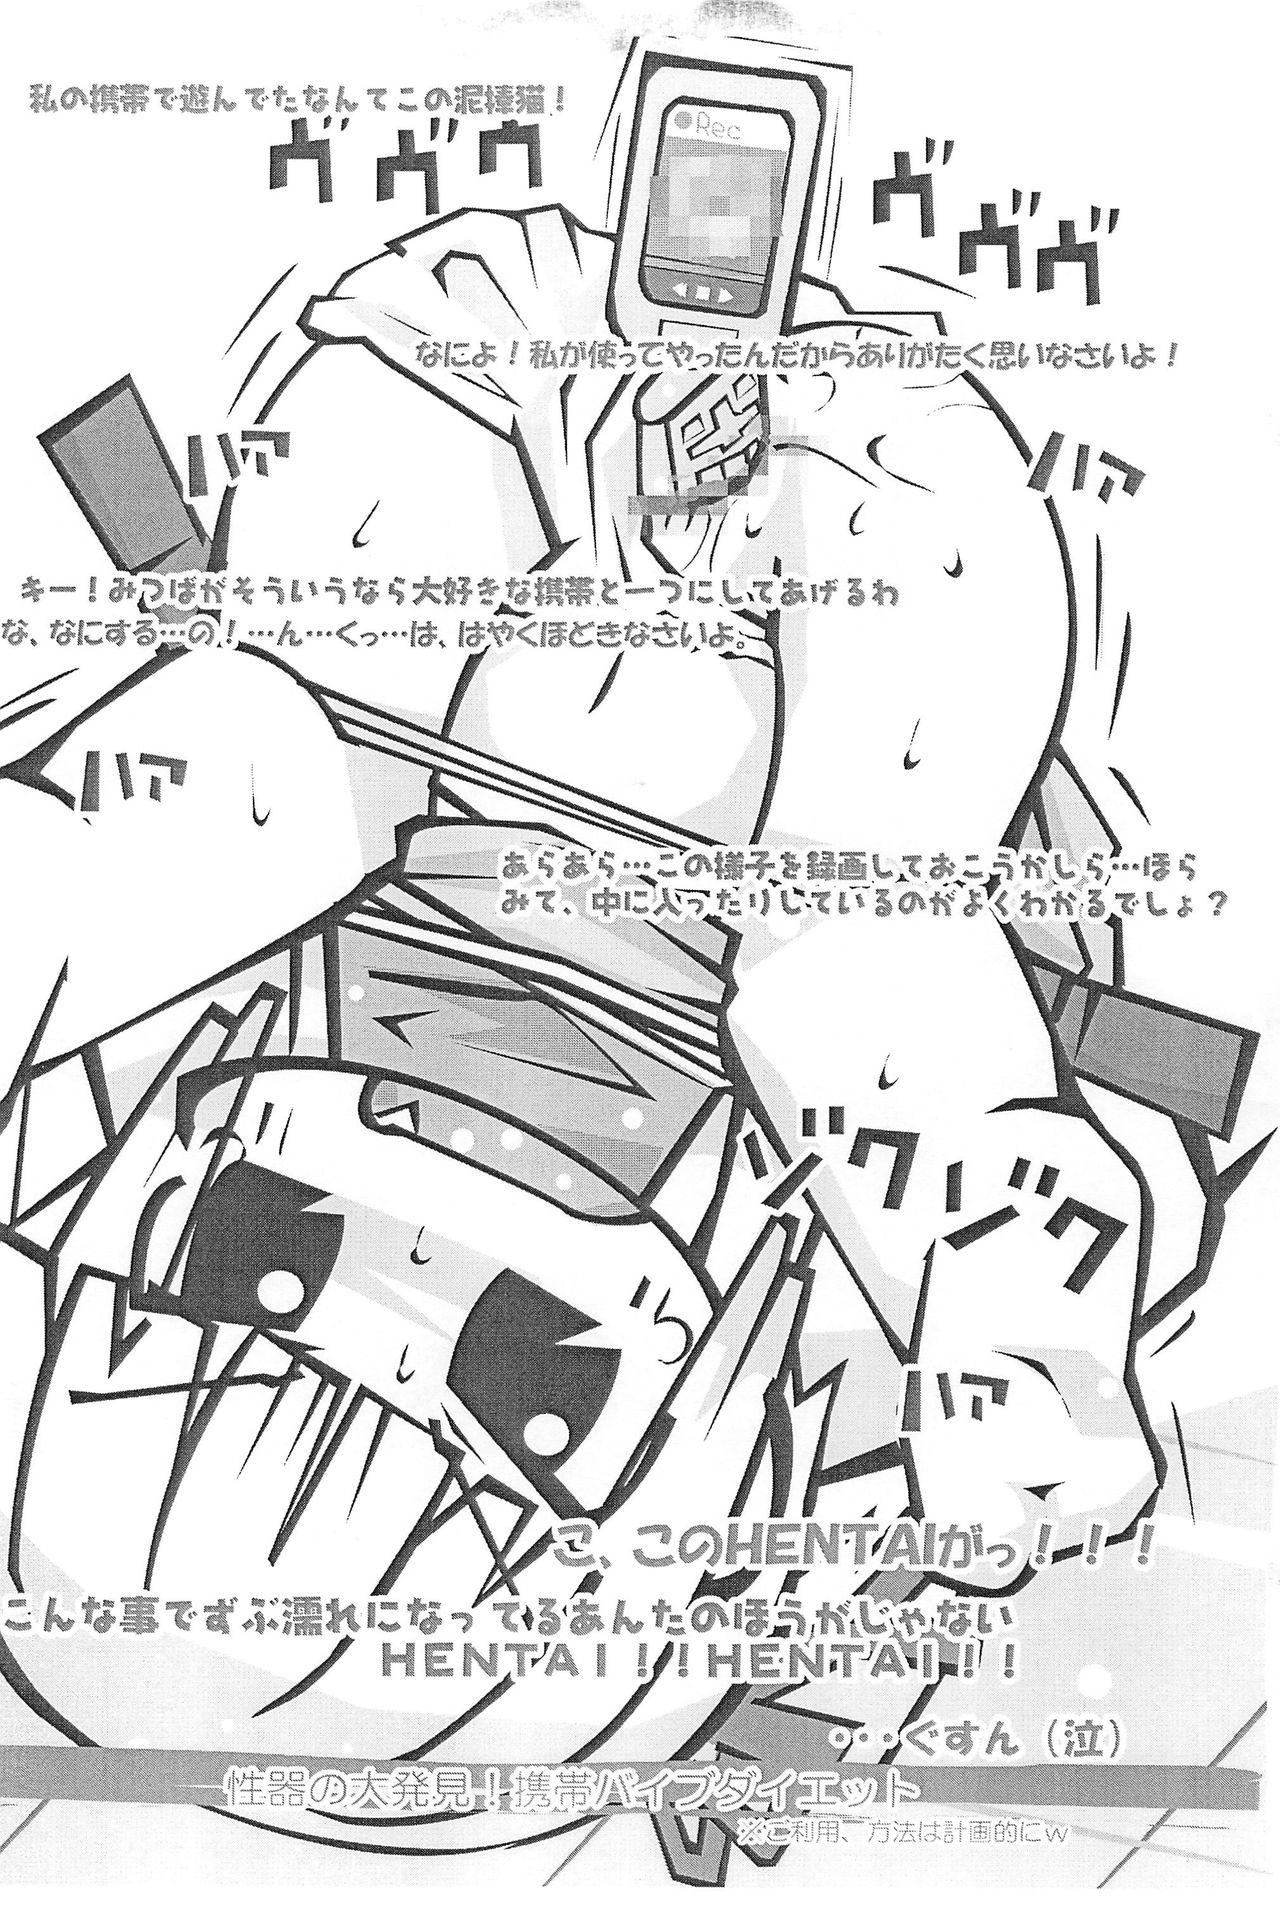 Thong Honiki-Hentai 6 no 3 - Mitsudomoe Perfect Body - Page 9